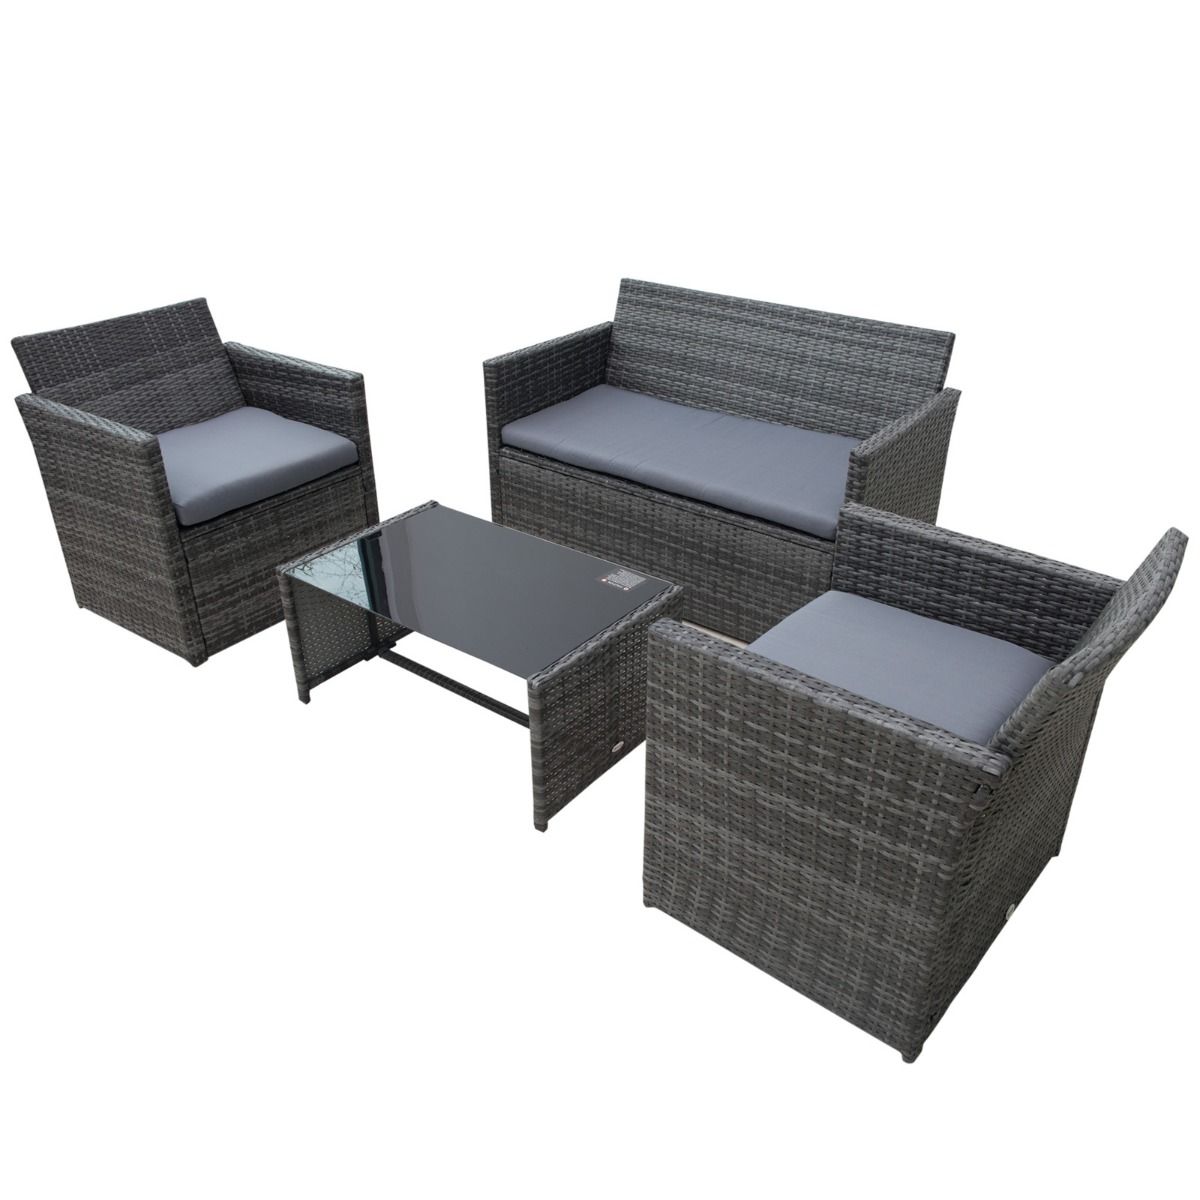 Outsunny Rattan Garden Sofa Set With Coffee Table, 4 Piece - Grey